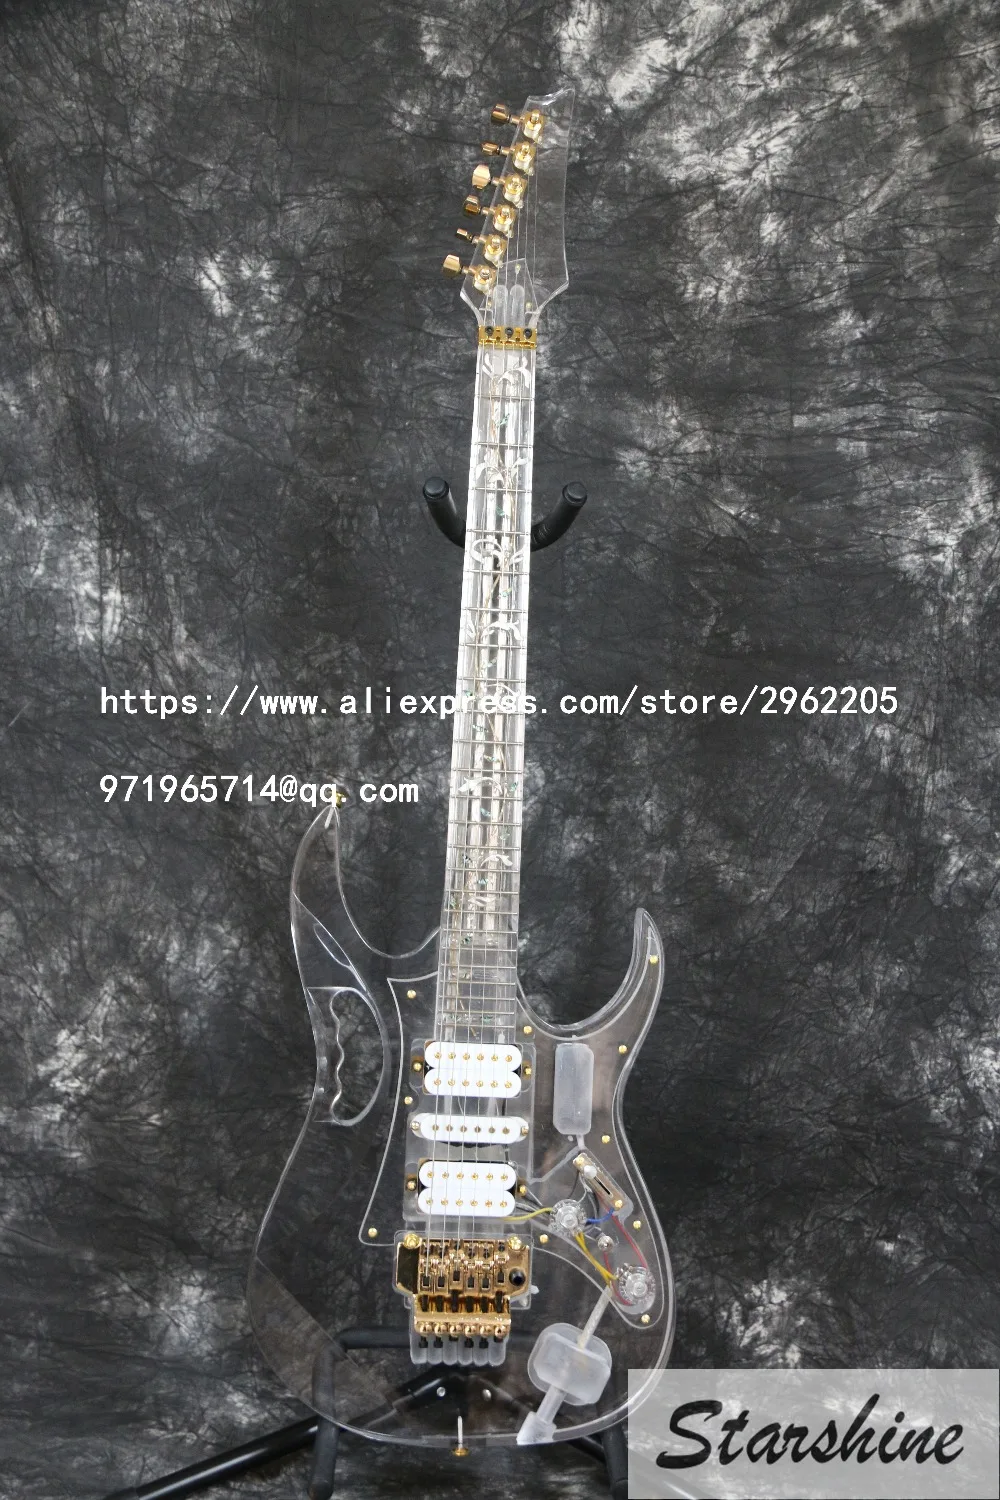 Nstock Free Shipping Sr-lbc-033 Electric Guitar Body Neck - AliExpress